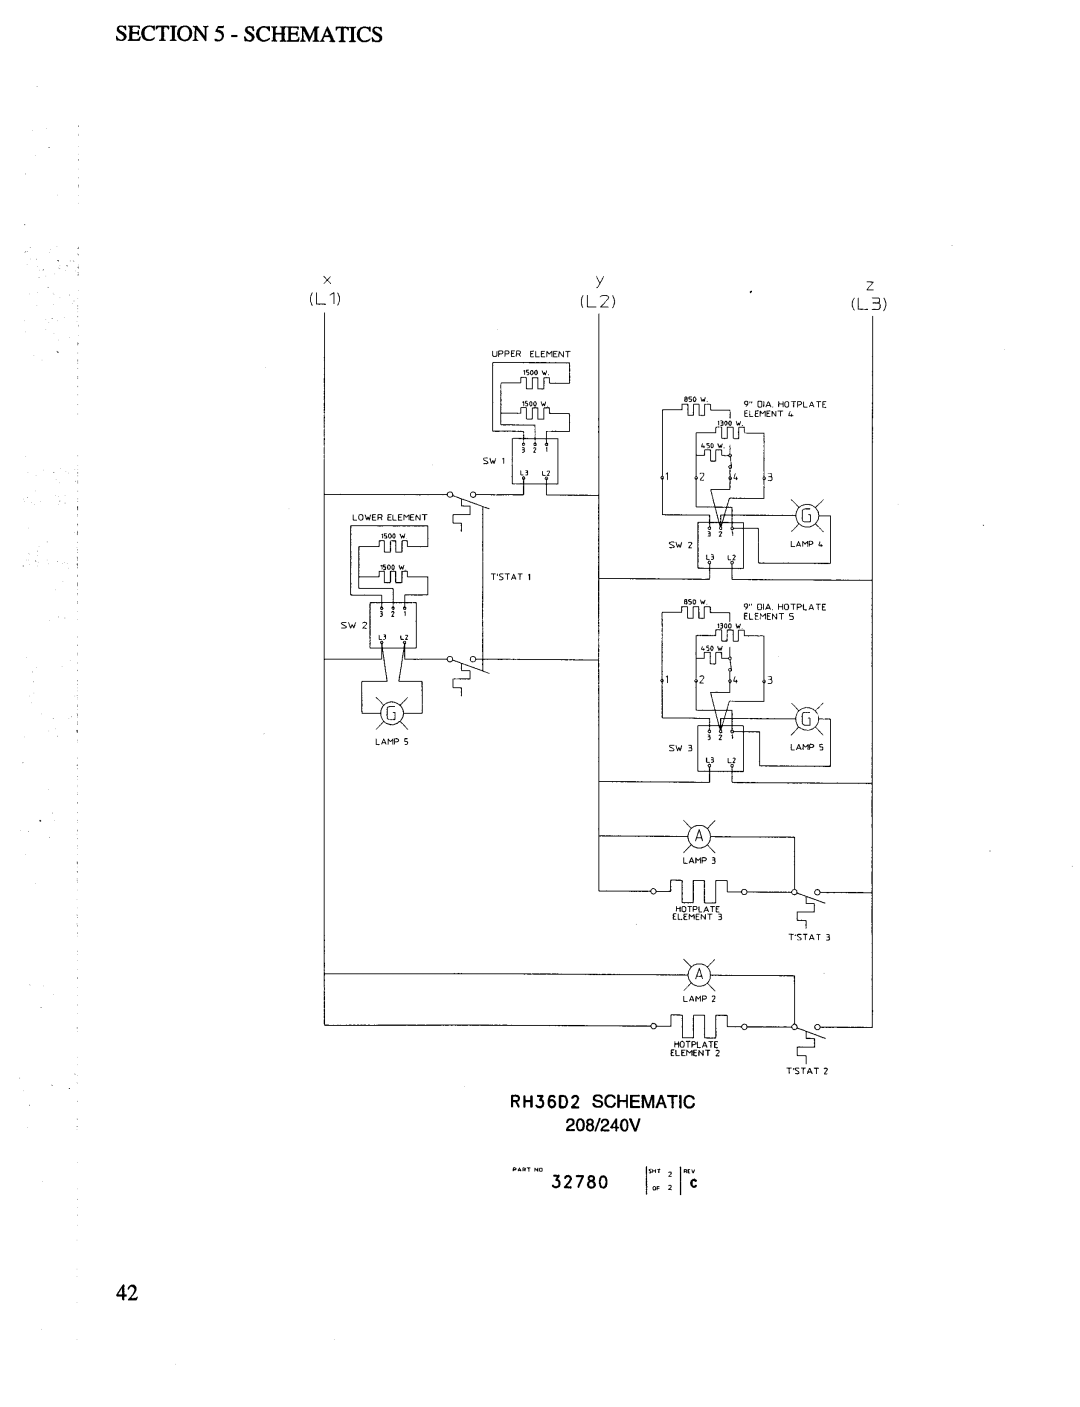 Toastmaster RH36, MH36, CO36 manual 